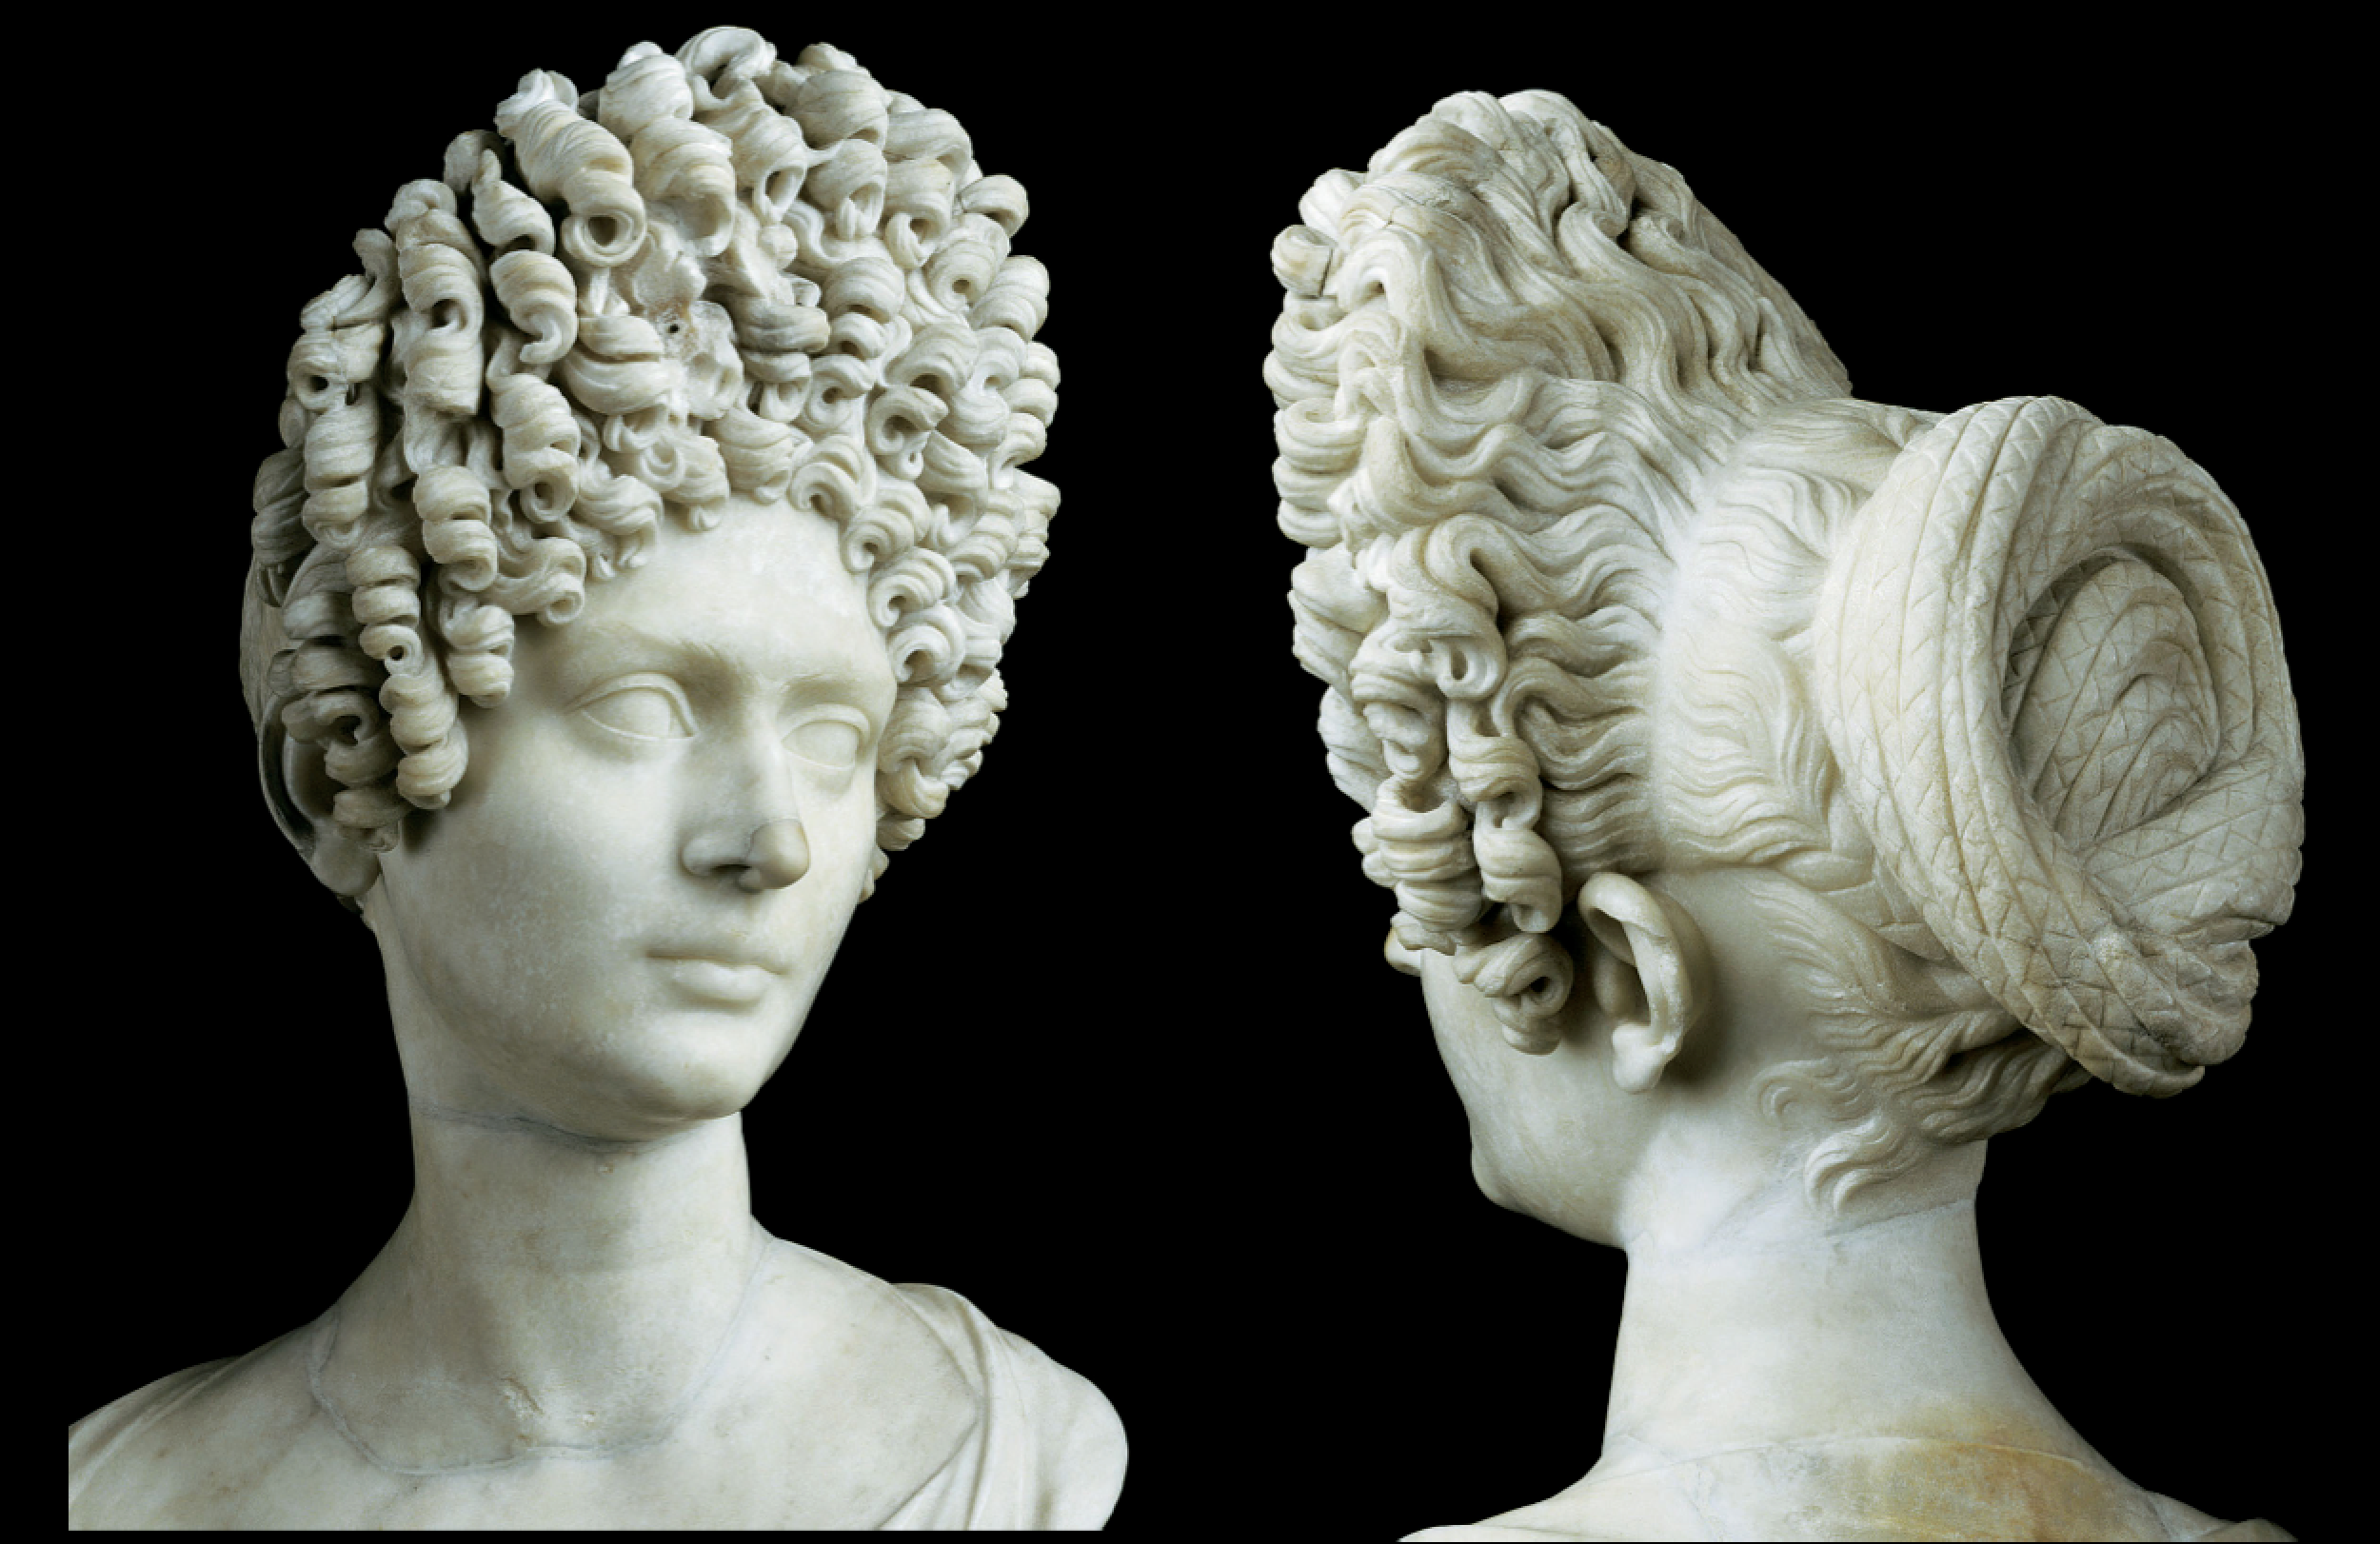 DOMVS ROMANA Intonsi et capillati peinado masculino en la antigua Roma